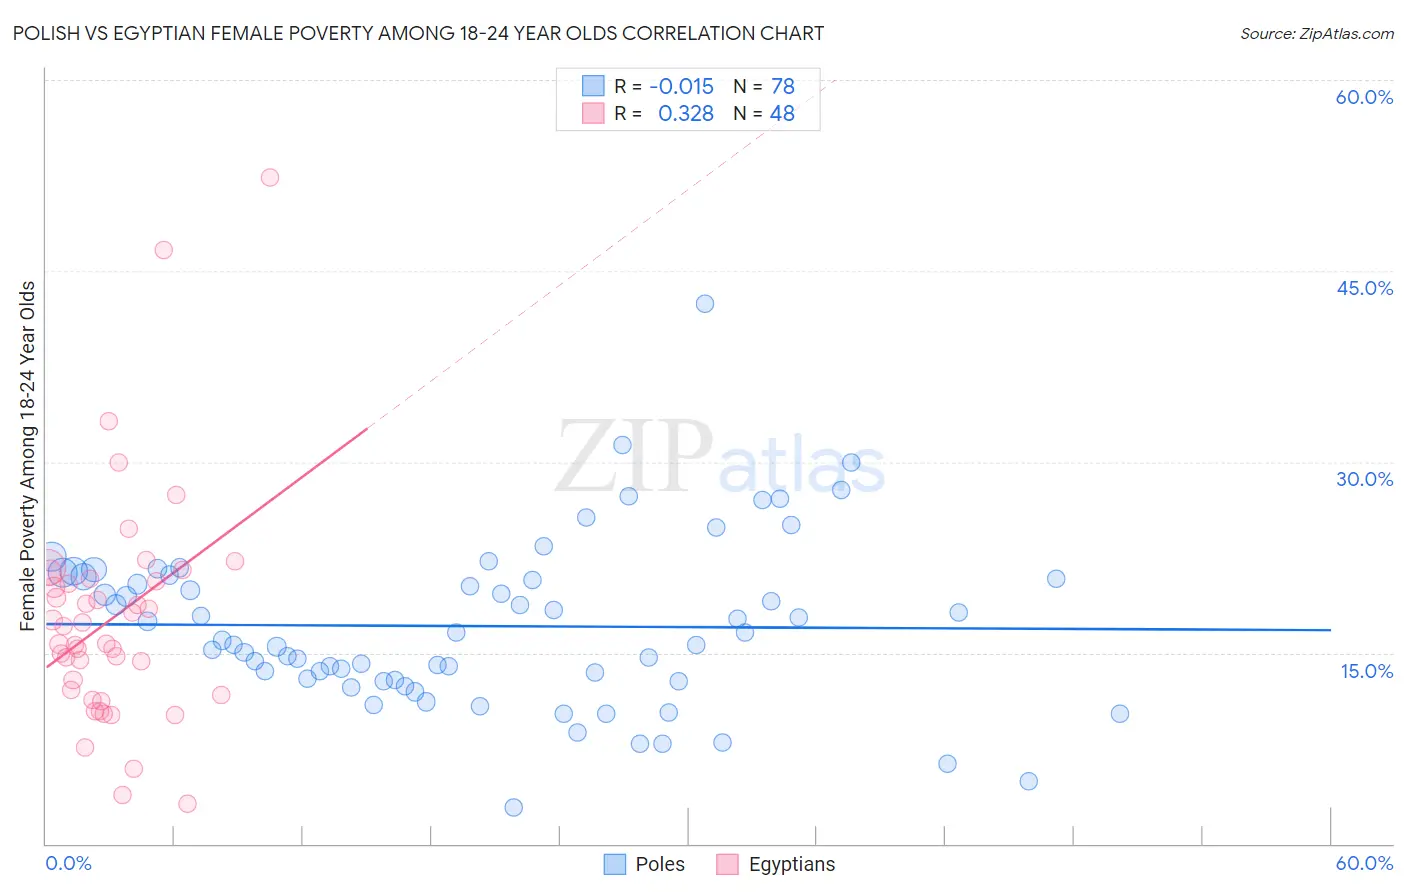 Polish vs Egyptian Female Poverty Among 18-24 Year Olds